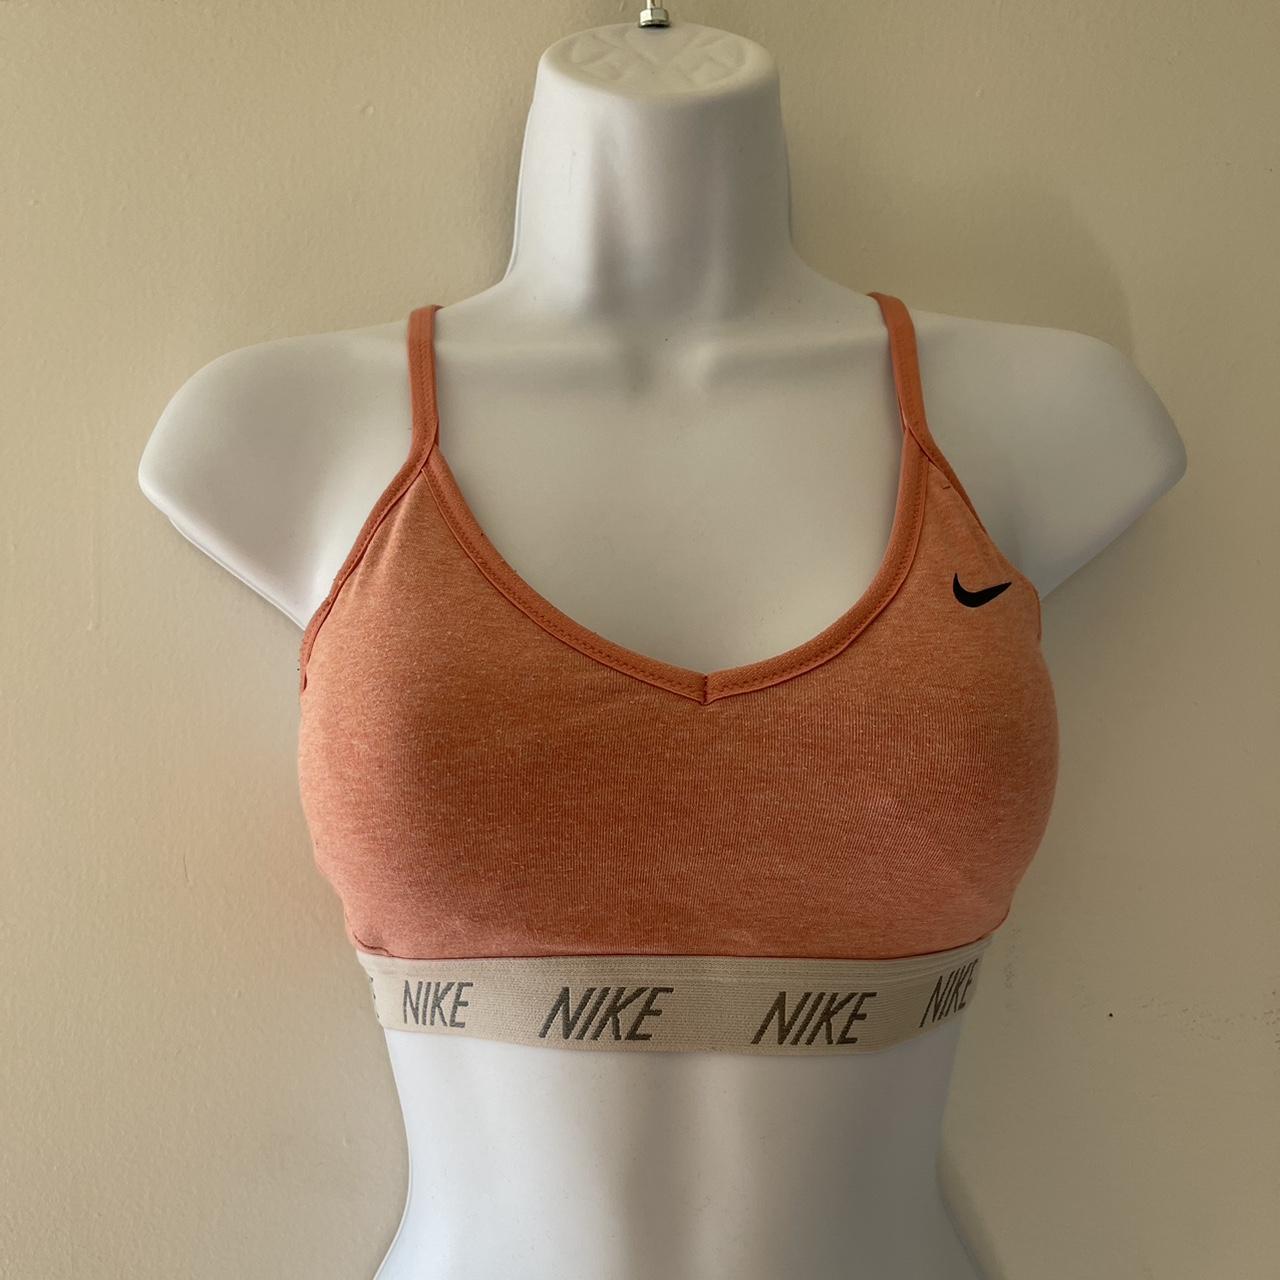 Orange Nike sports bra